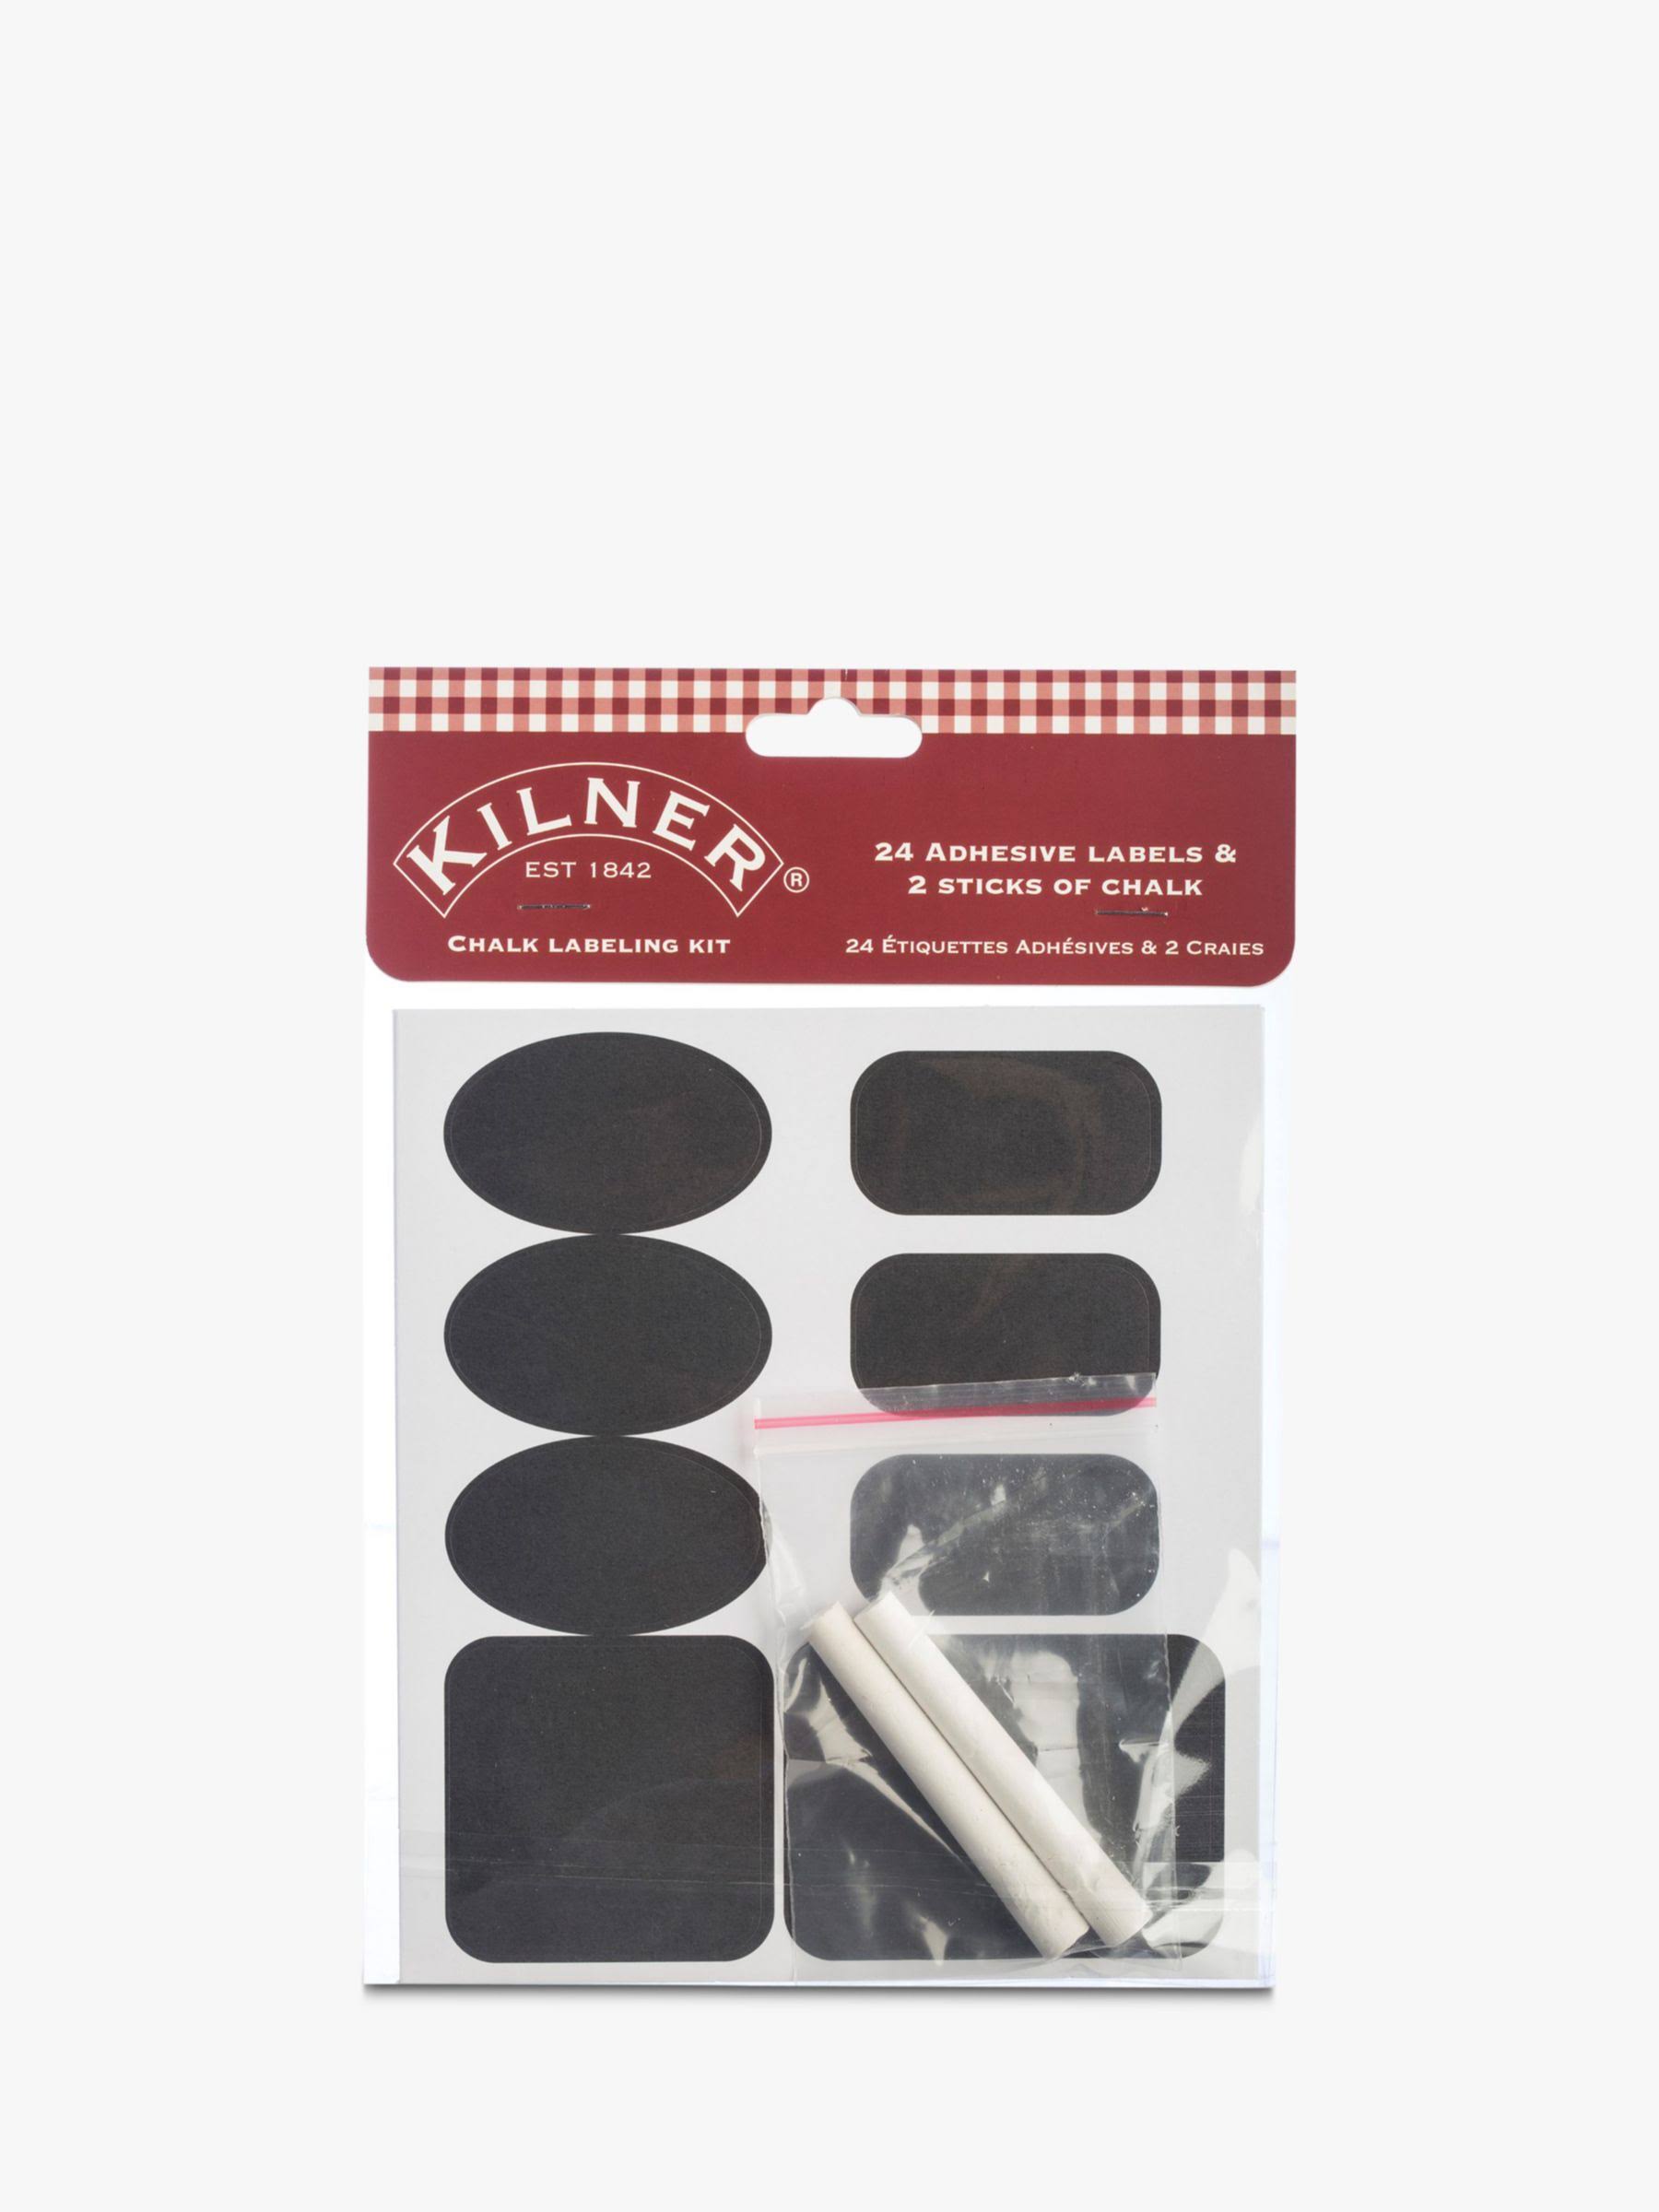 Kilner Jar Chalk Labeling Kit - 26 Pack